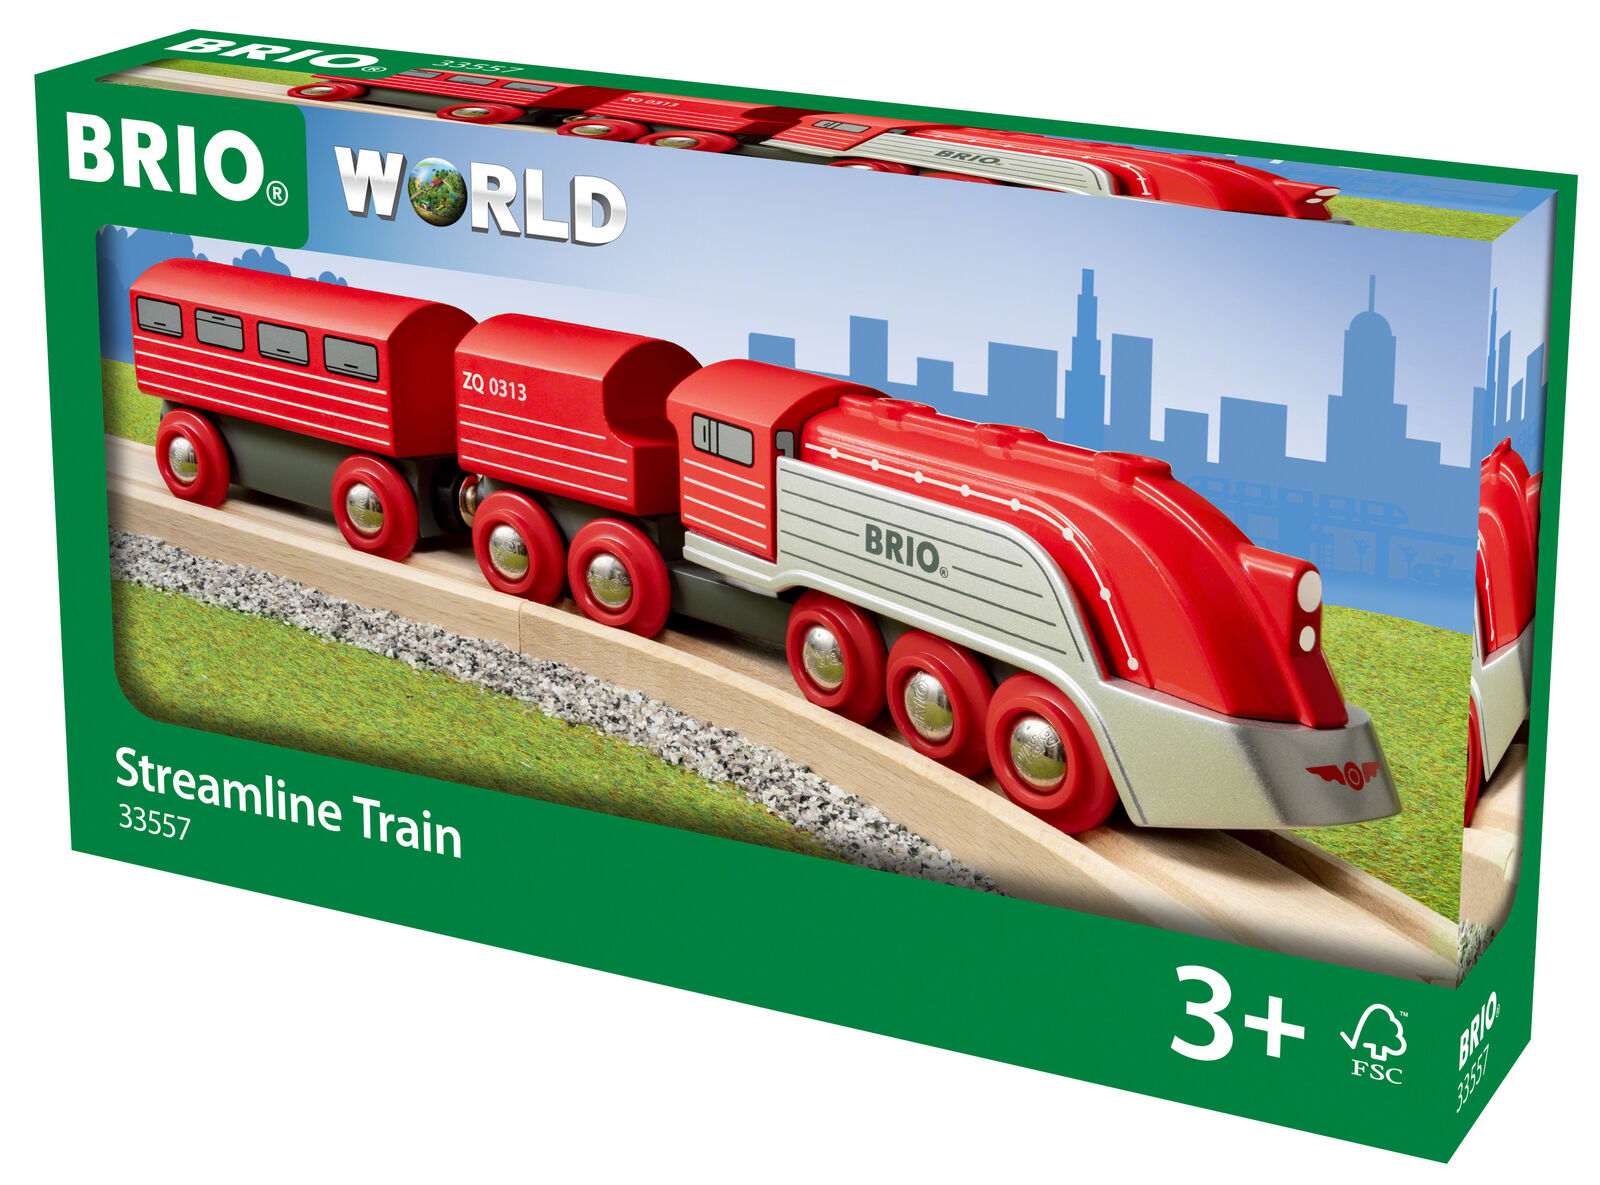 33557 BRIO Streamline Train Wooden Railway Plastic Engine Speed Train Age 3yrs+